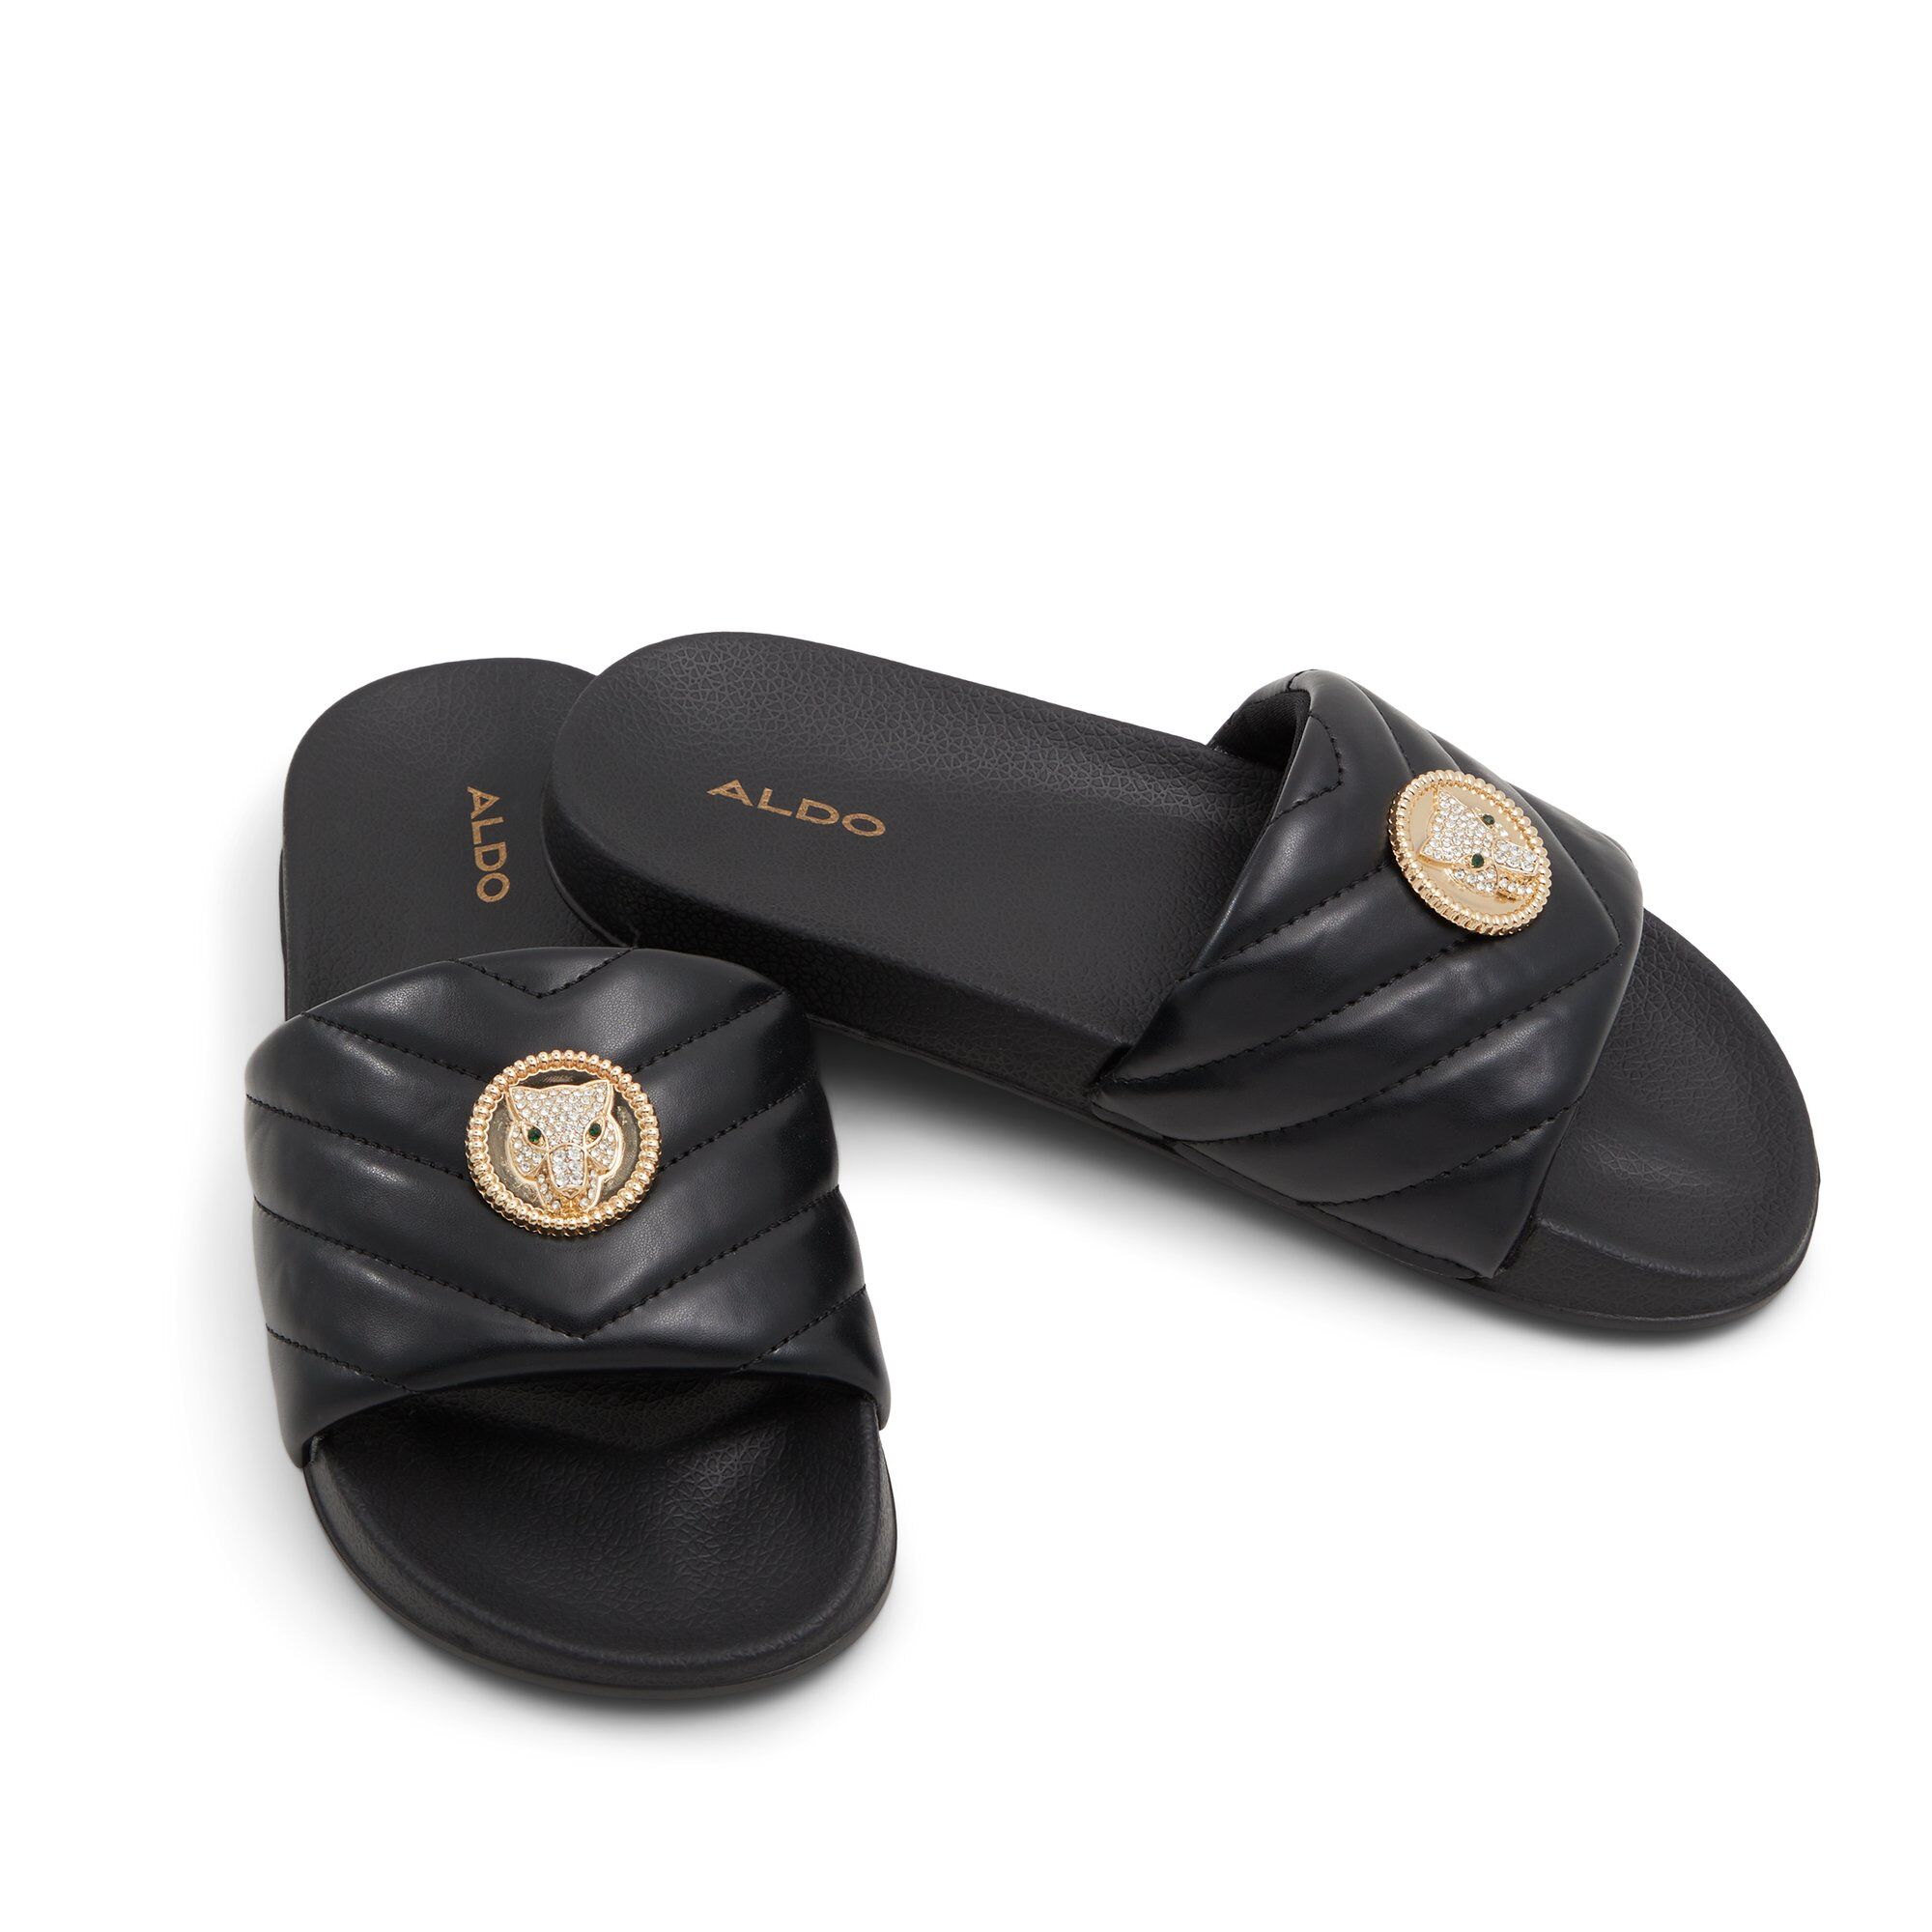 ALDO Leilany - Women's Flat Sandals - Black/Gold, Size 6